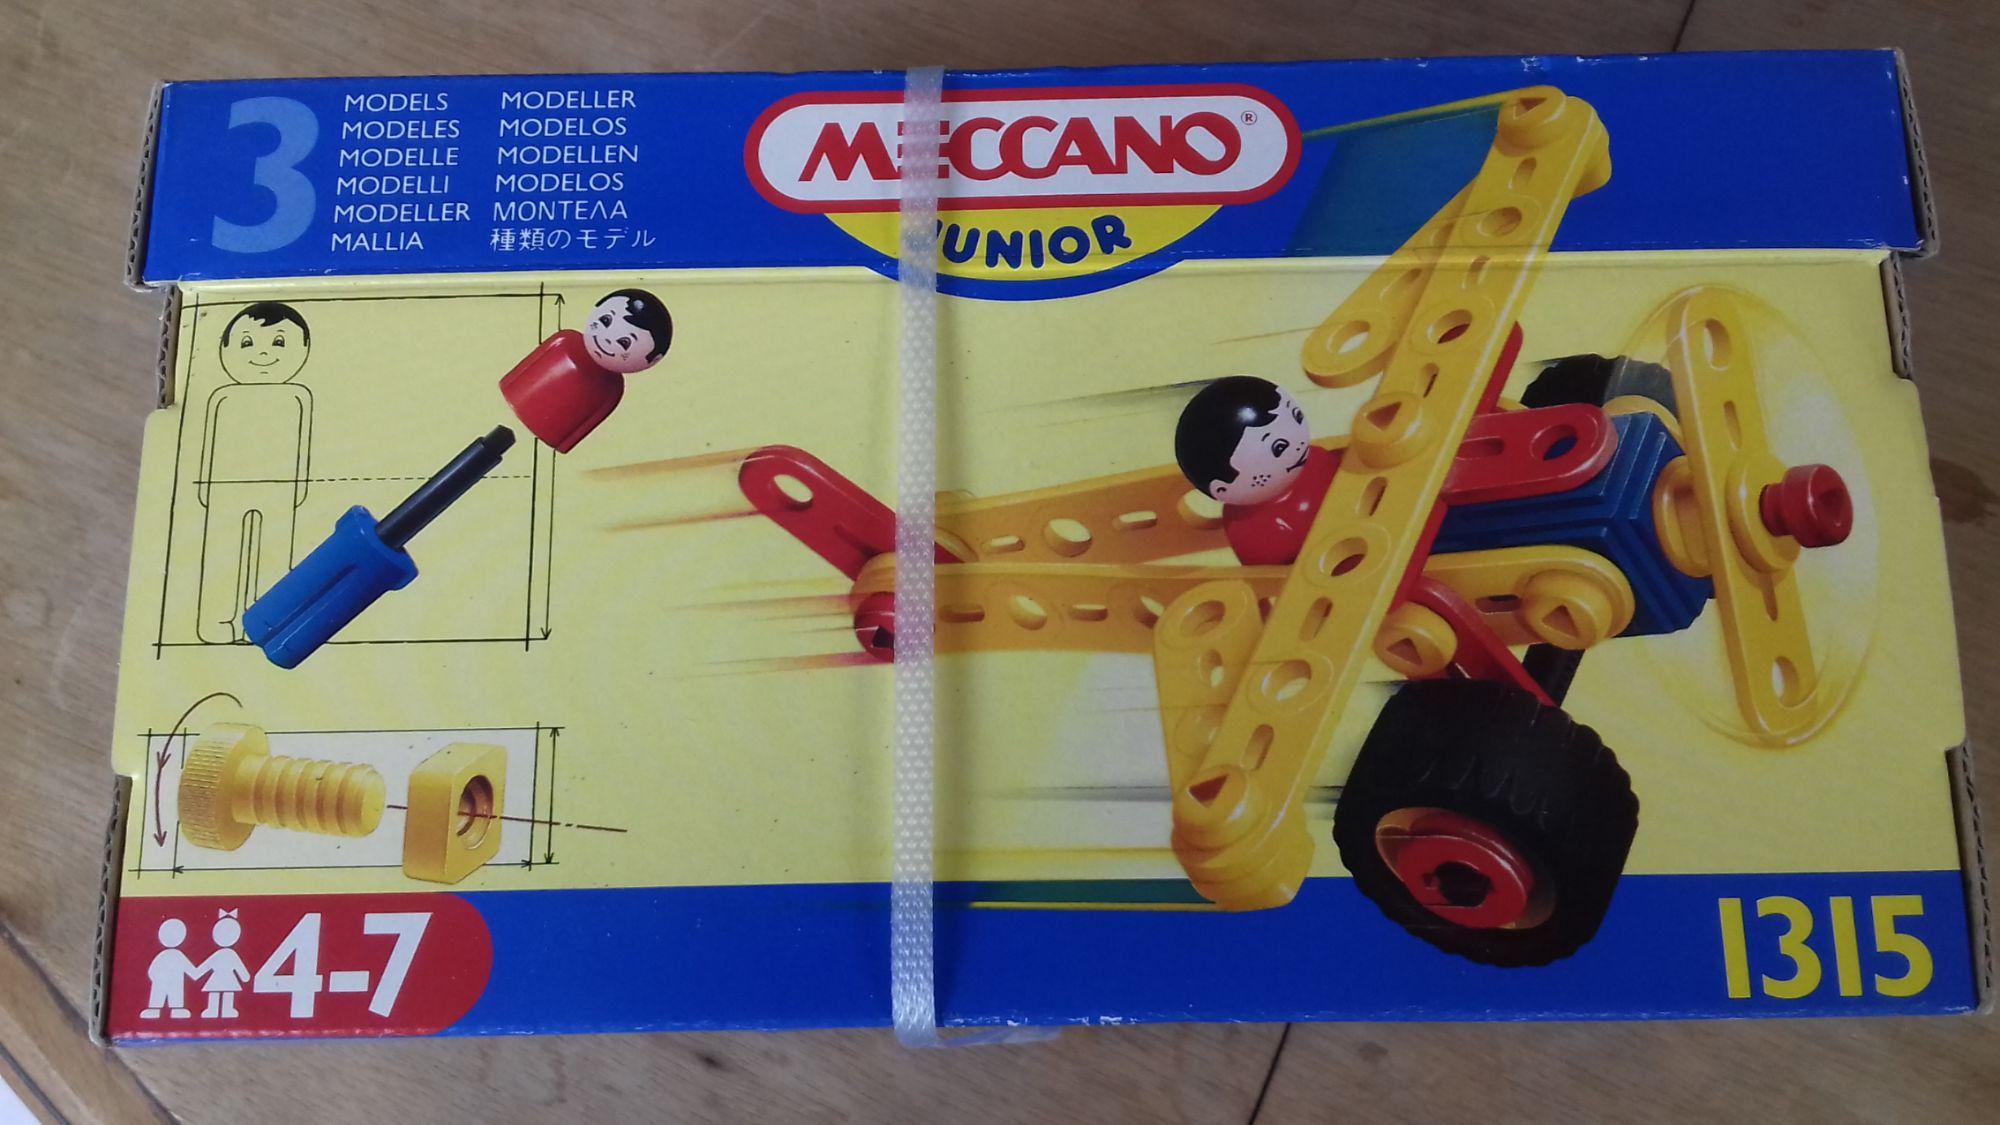 Meccano Junior 1315 - pièces en plastique